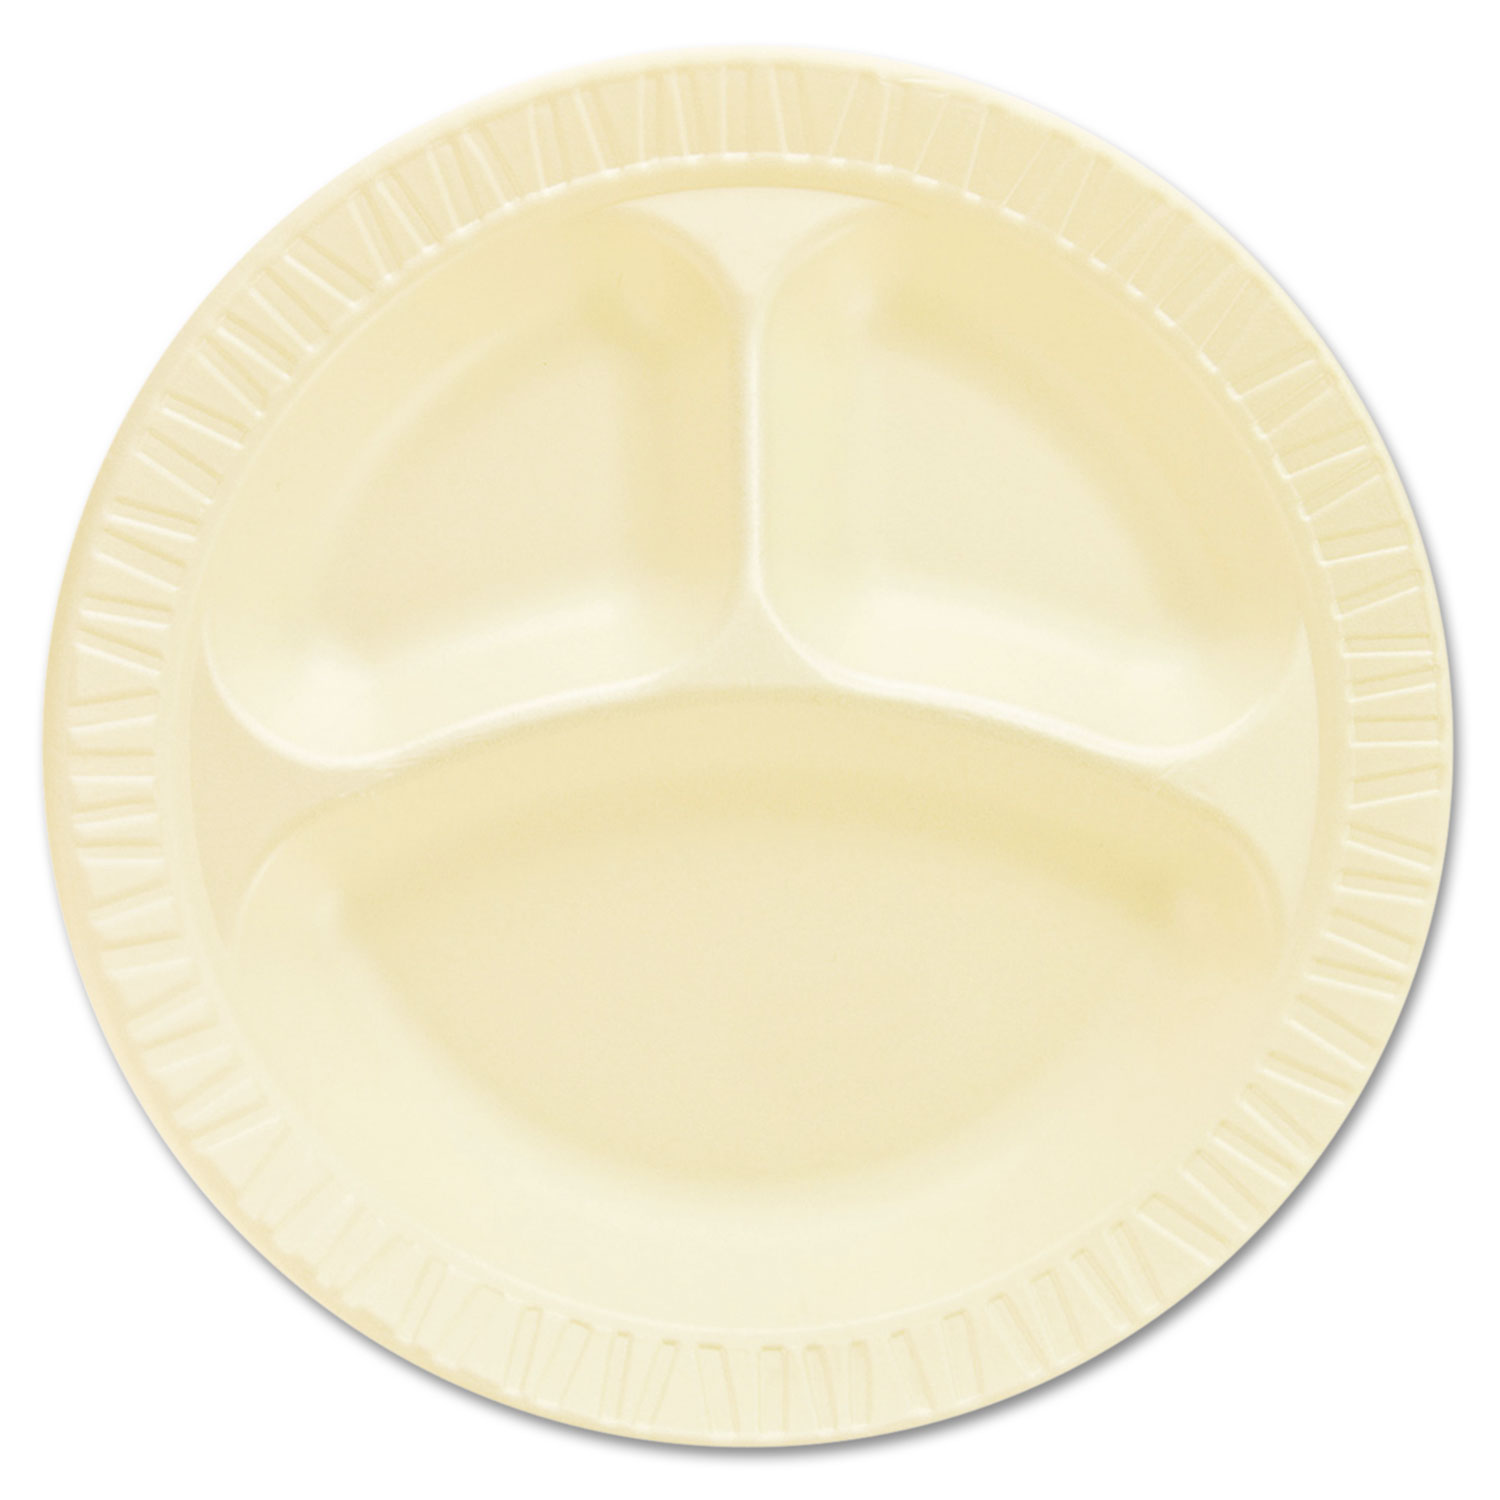  Dart 10CPHQR Laminated Foam Dinnerware, Plates, 10 1/4, Honey, 3 Comp, 125/Pk, 4 Pks/Ctn (DCC10CPHQR) 